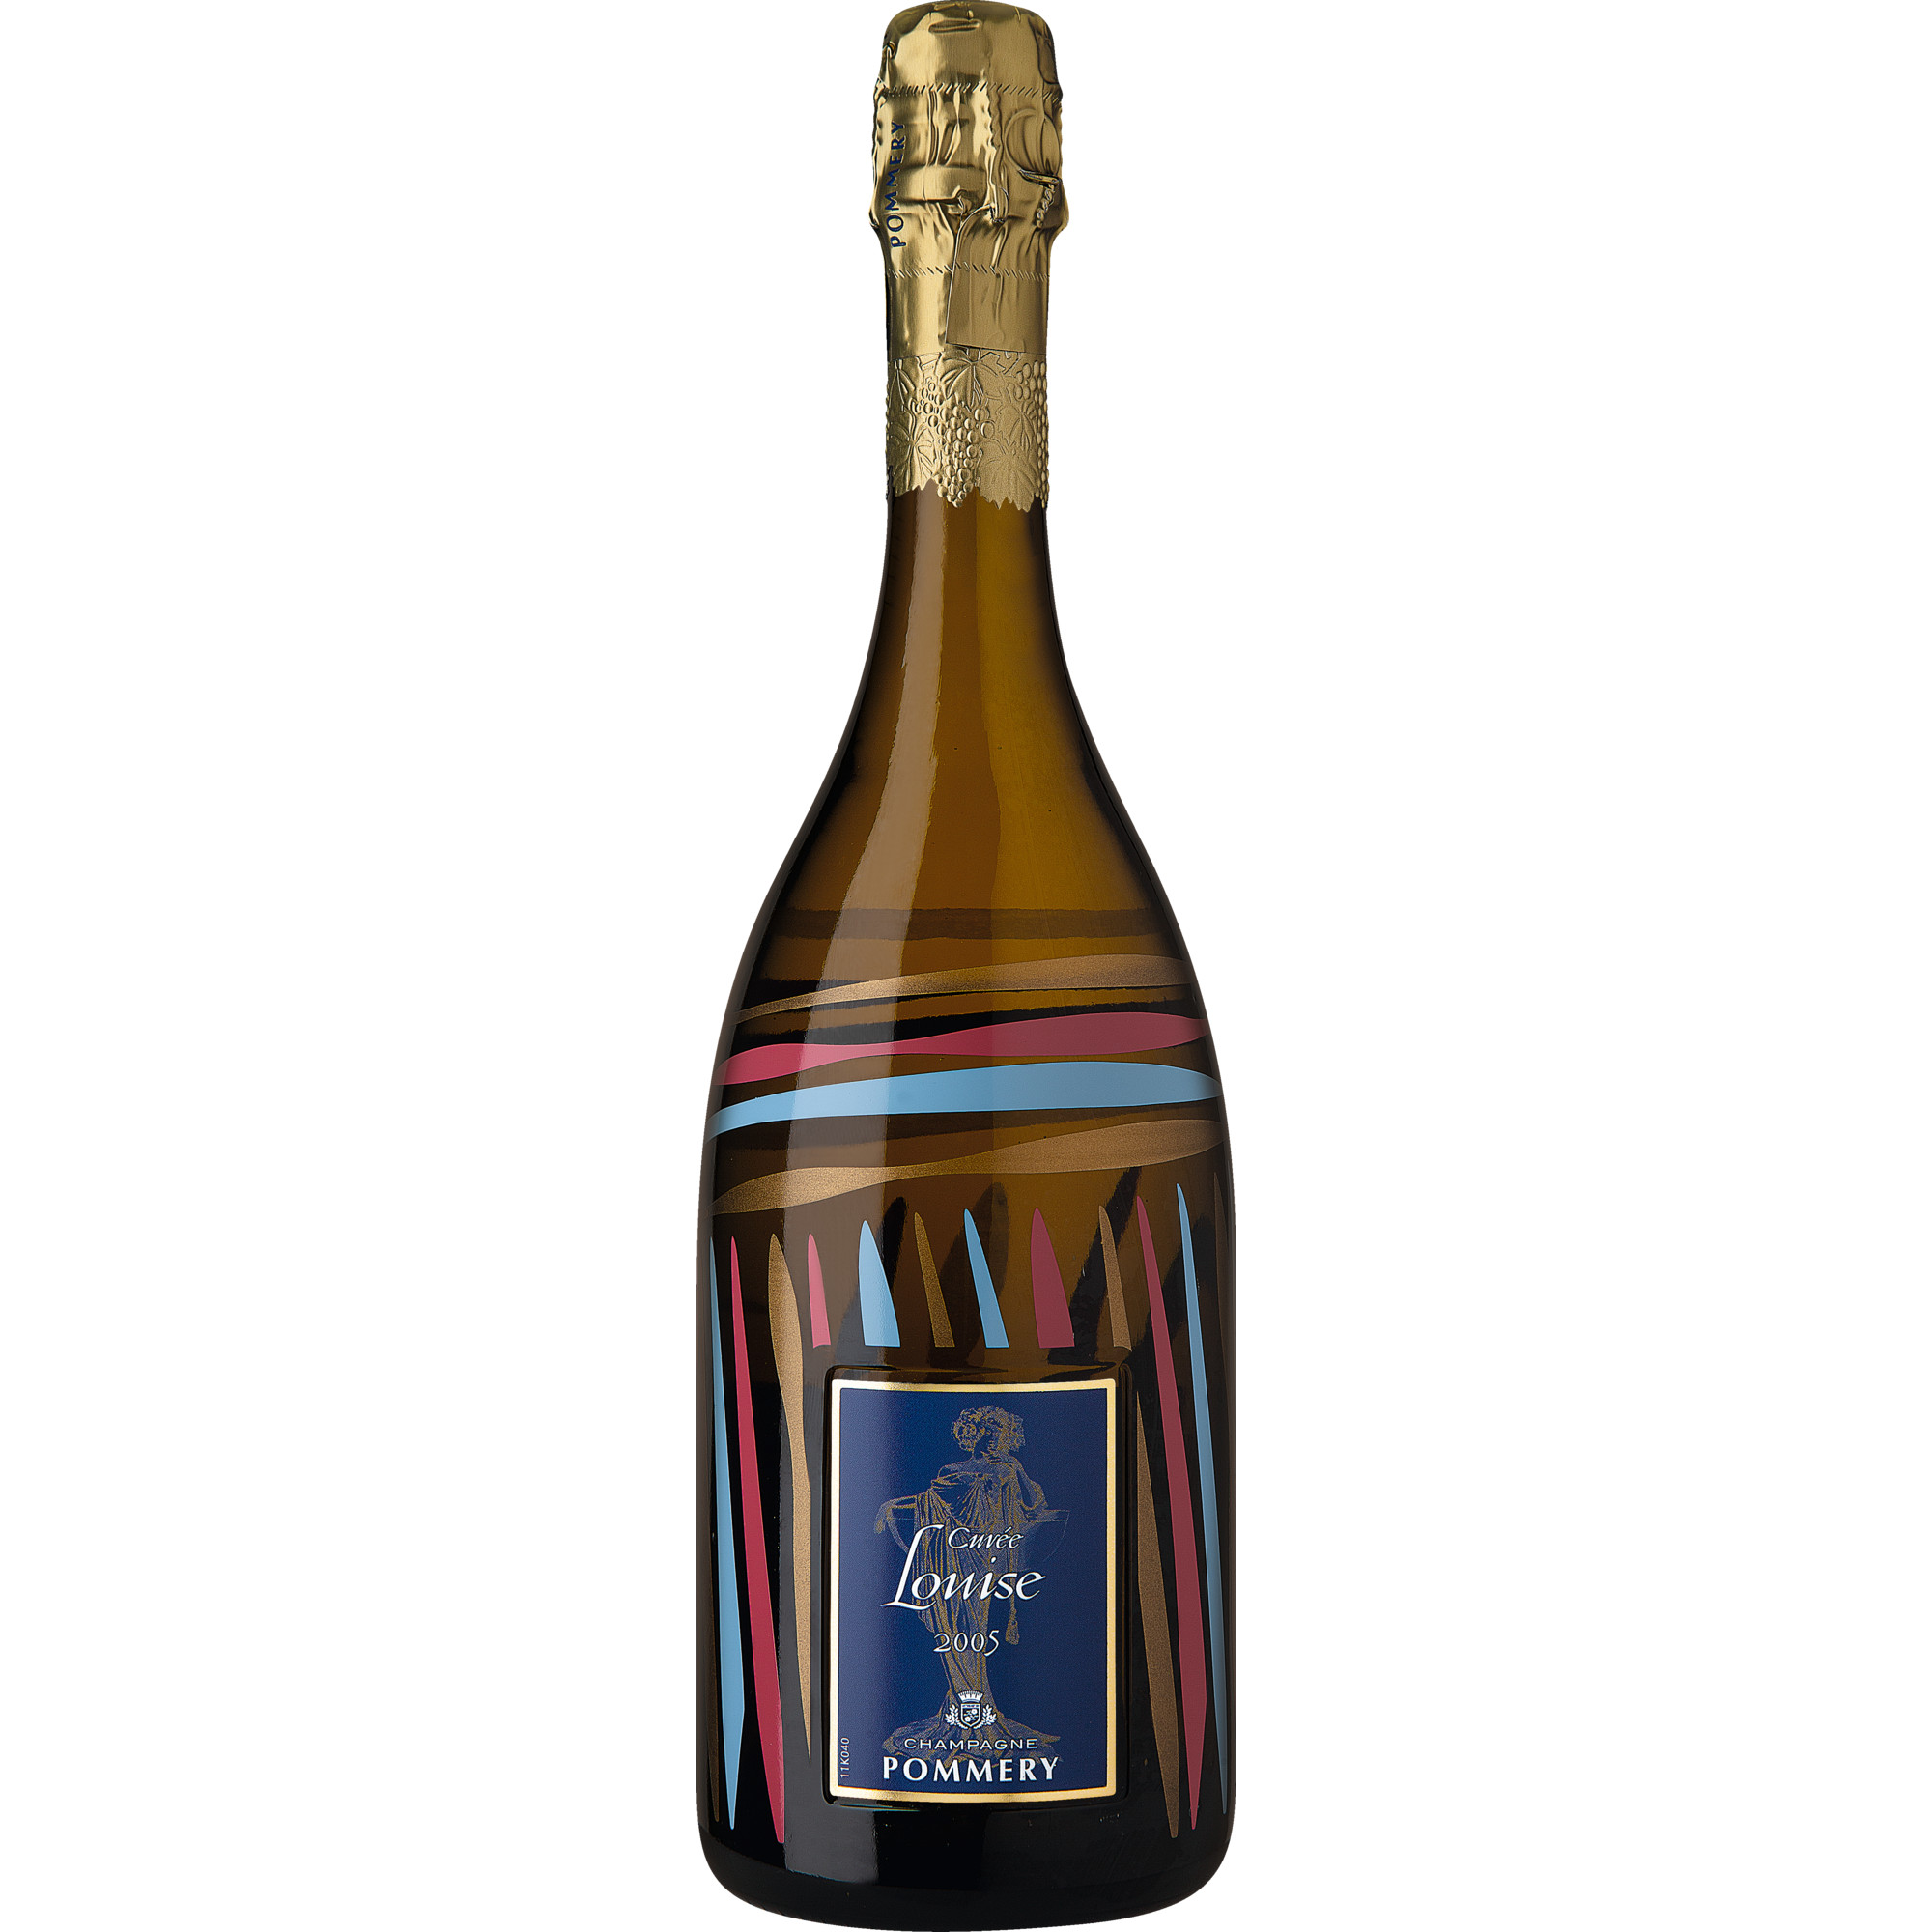 Champagne Cuvée Louise Pommery Limited Edition, Brut, Champagne AC, Geschenketui, Champagne, 2005, Schaumwein  Champagner Hawesko